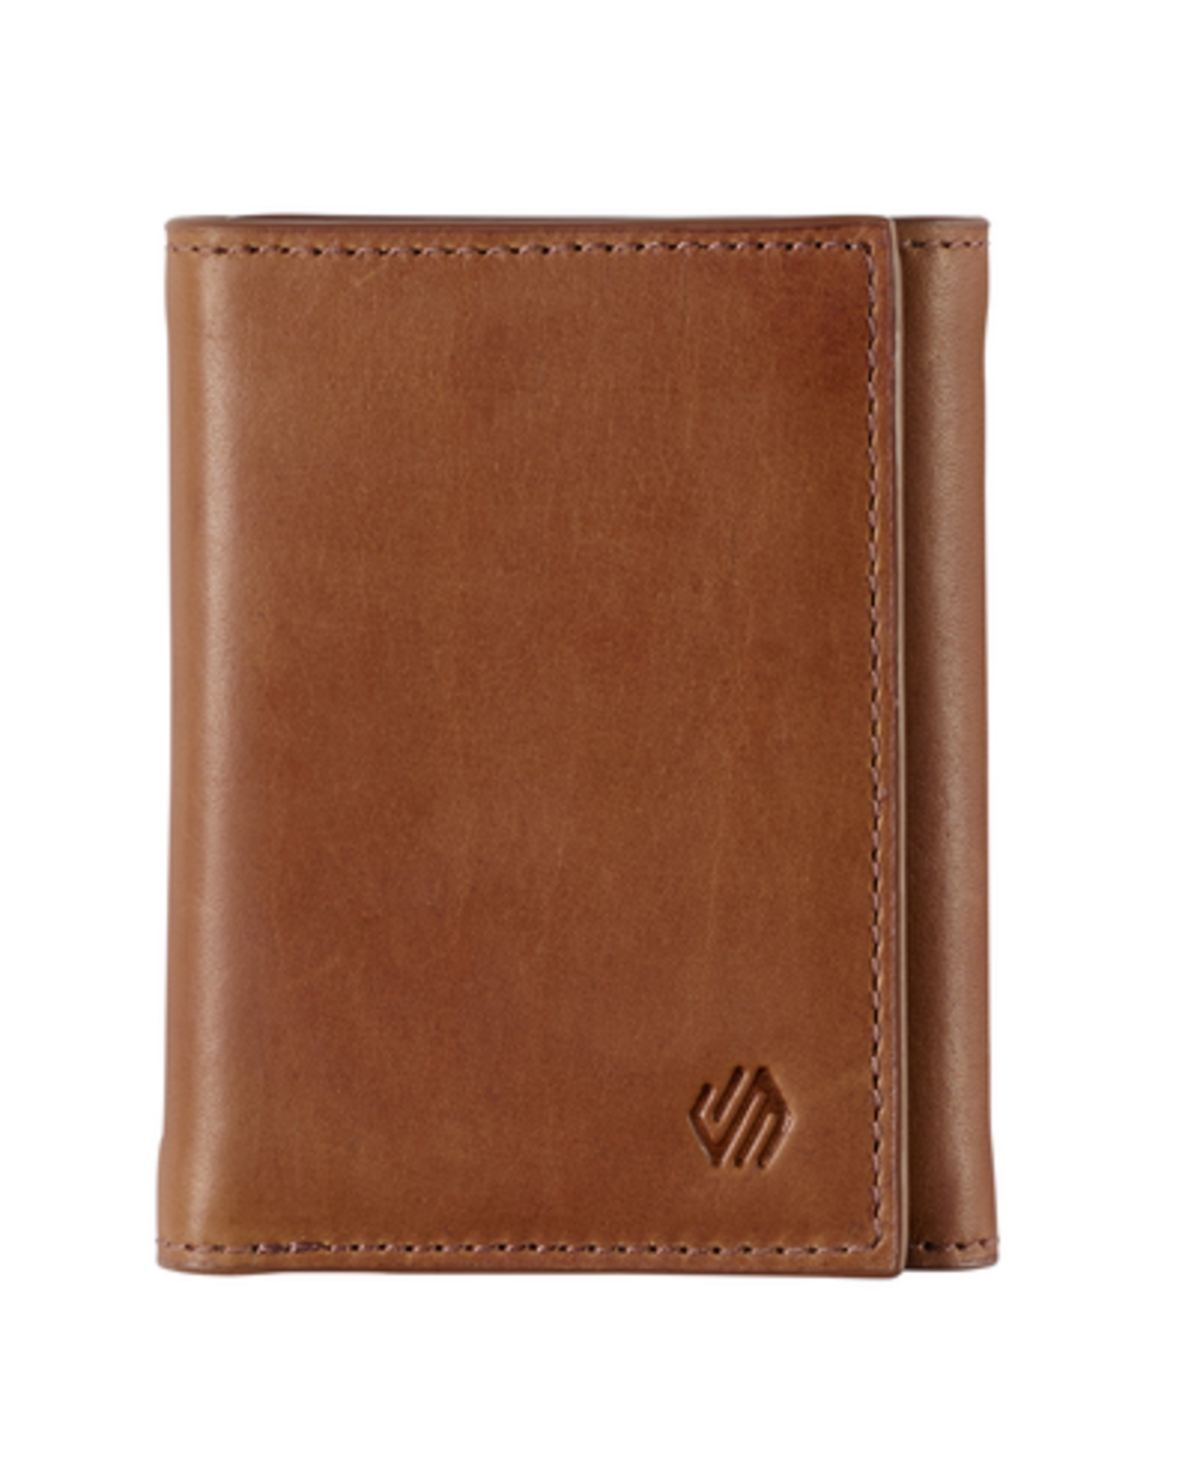 Men's Rhodes Trifold Wallet - Tan Full Grain Leather